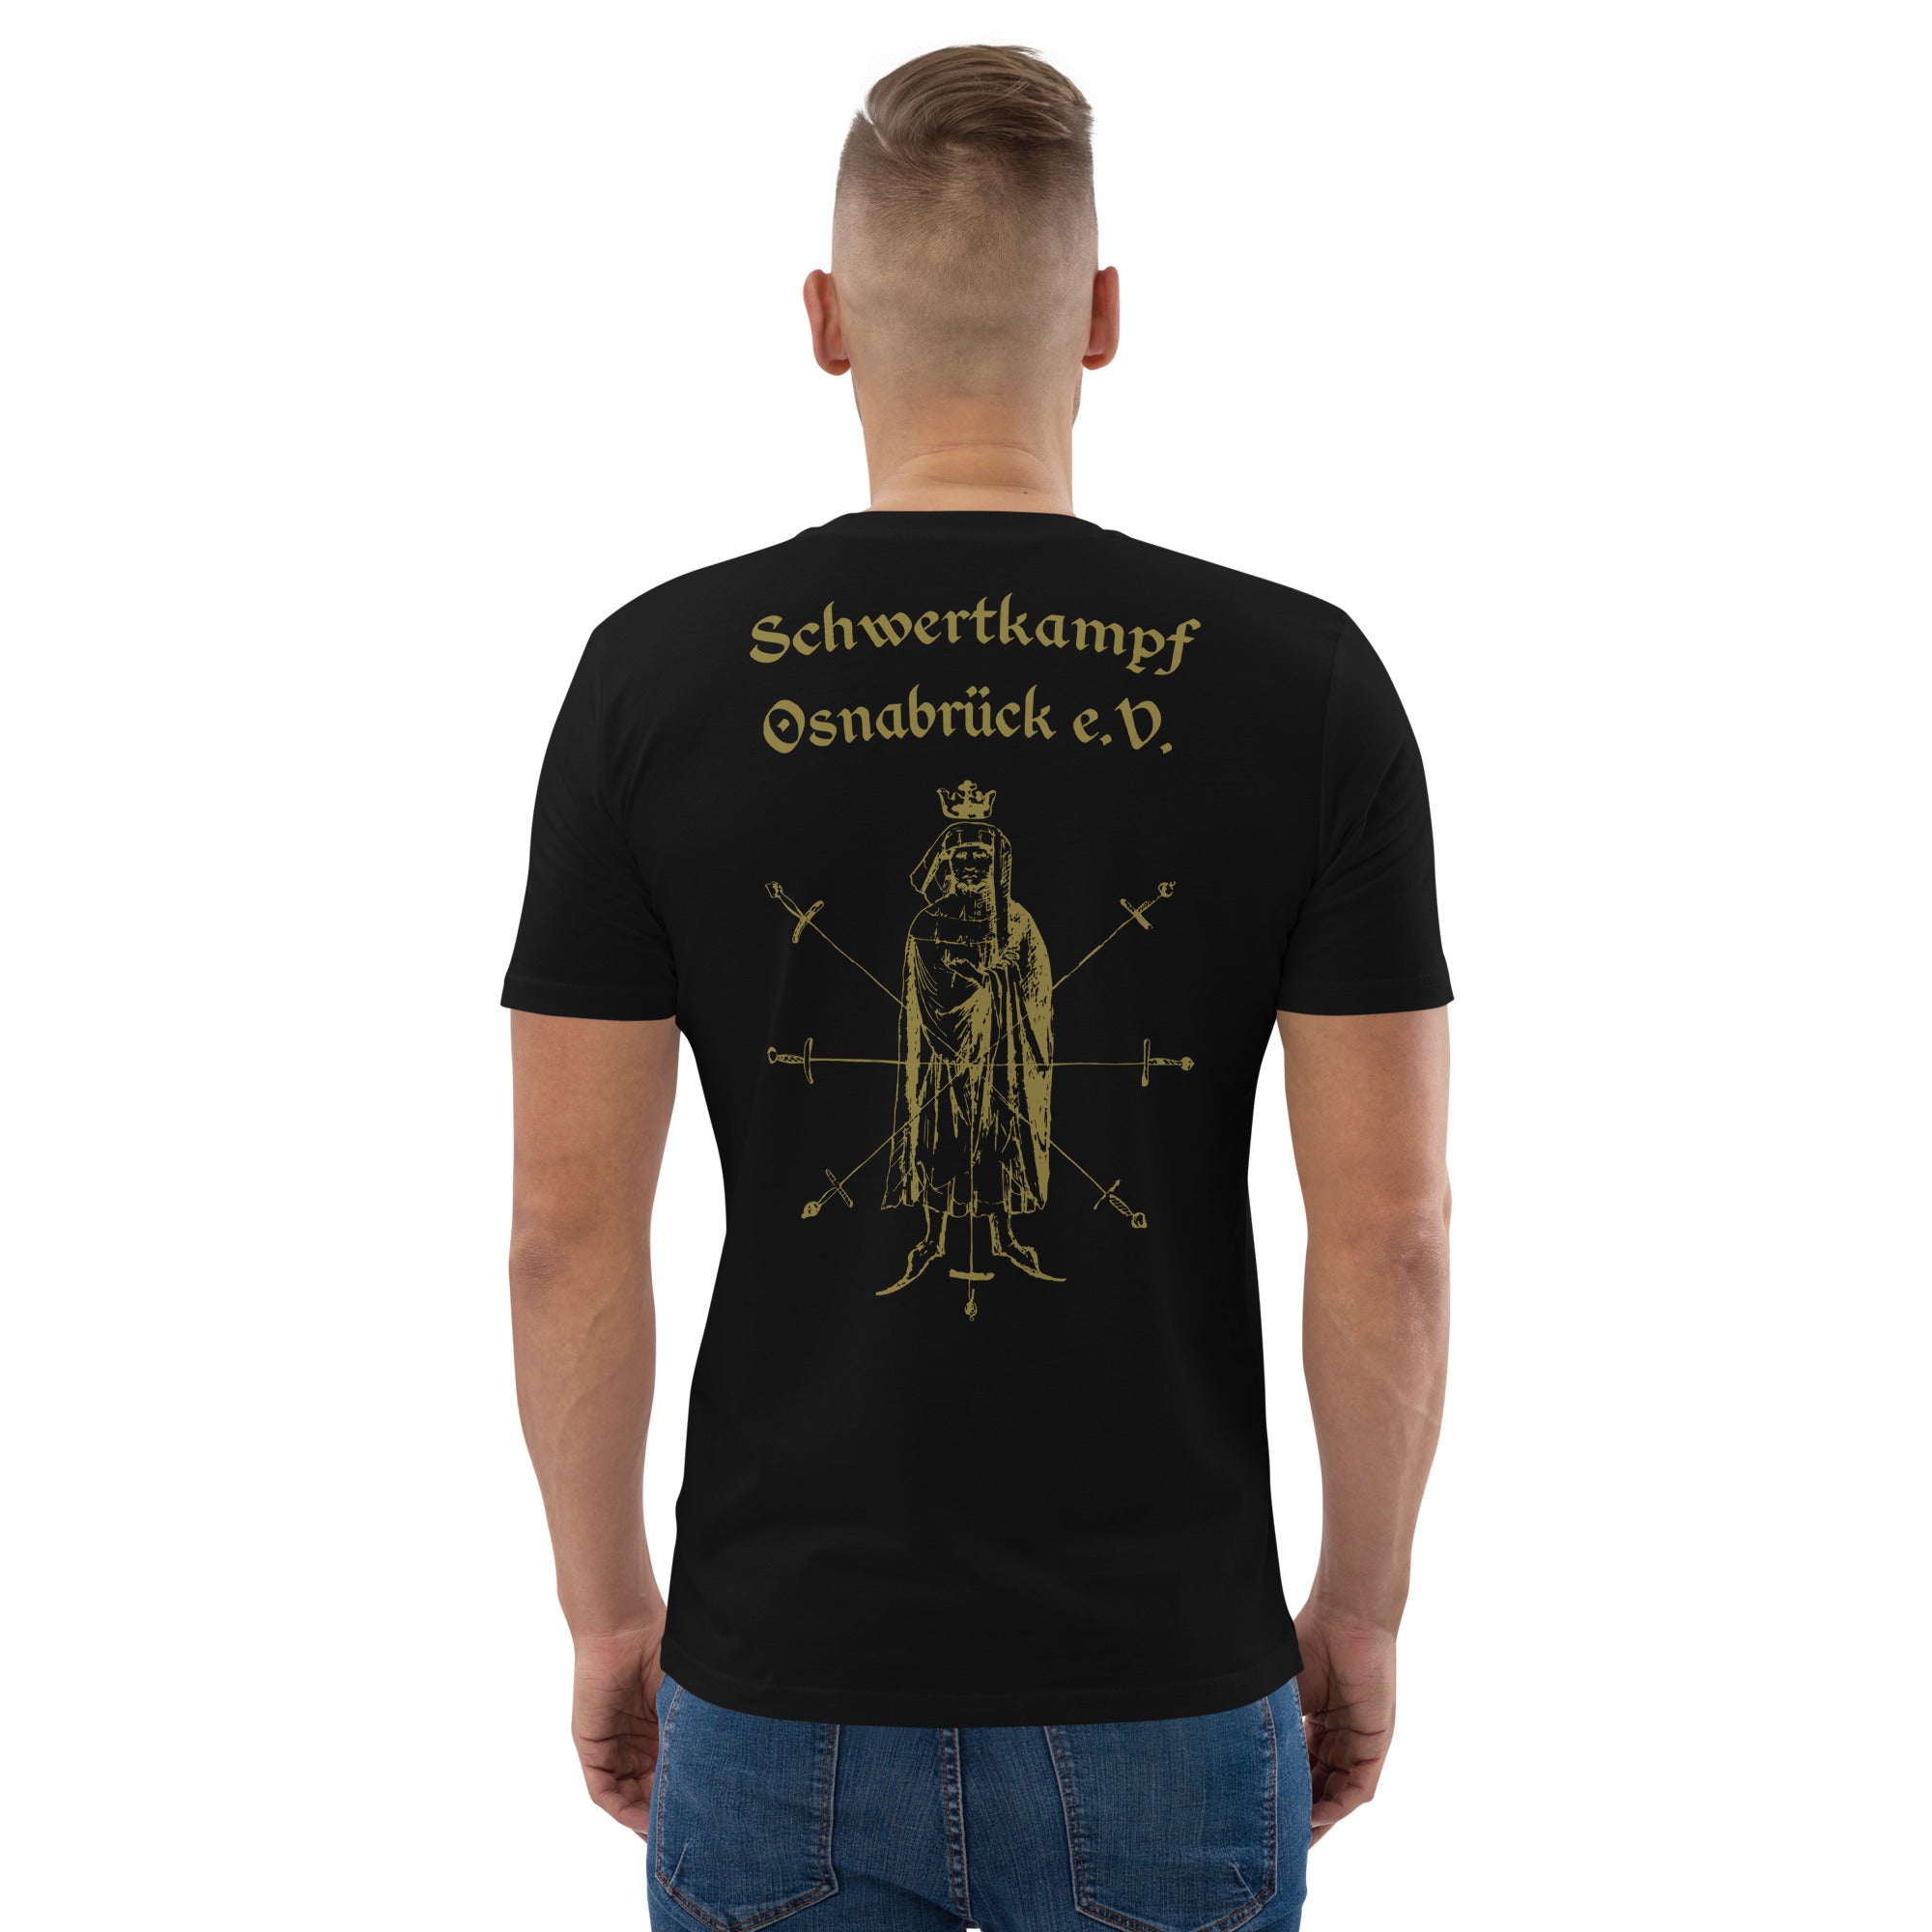 SKOS- Bio-Baumwoll-T-Shirt